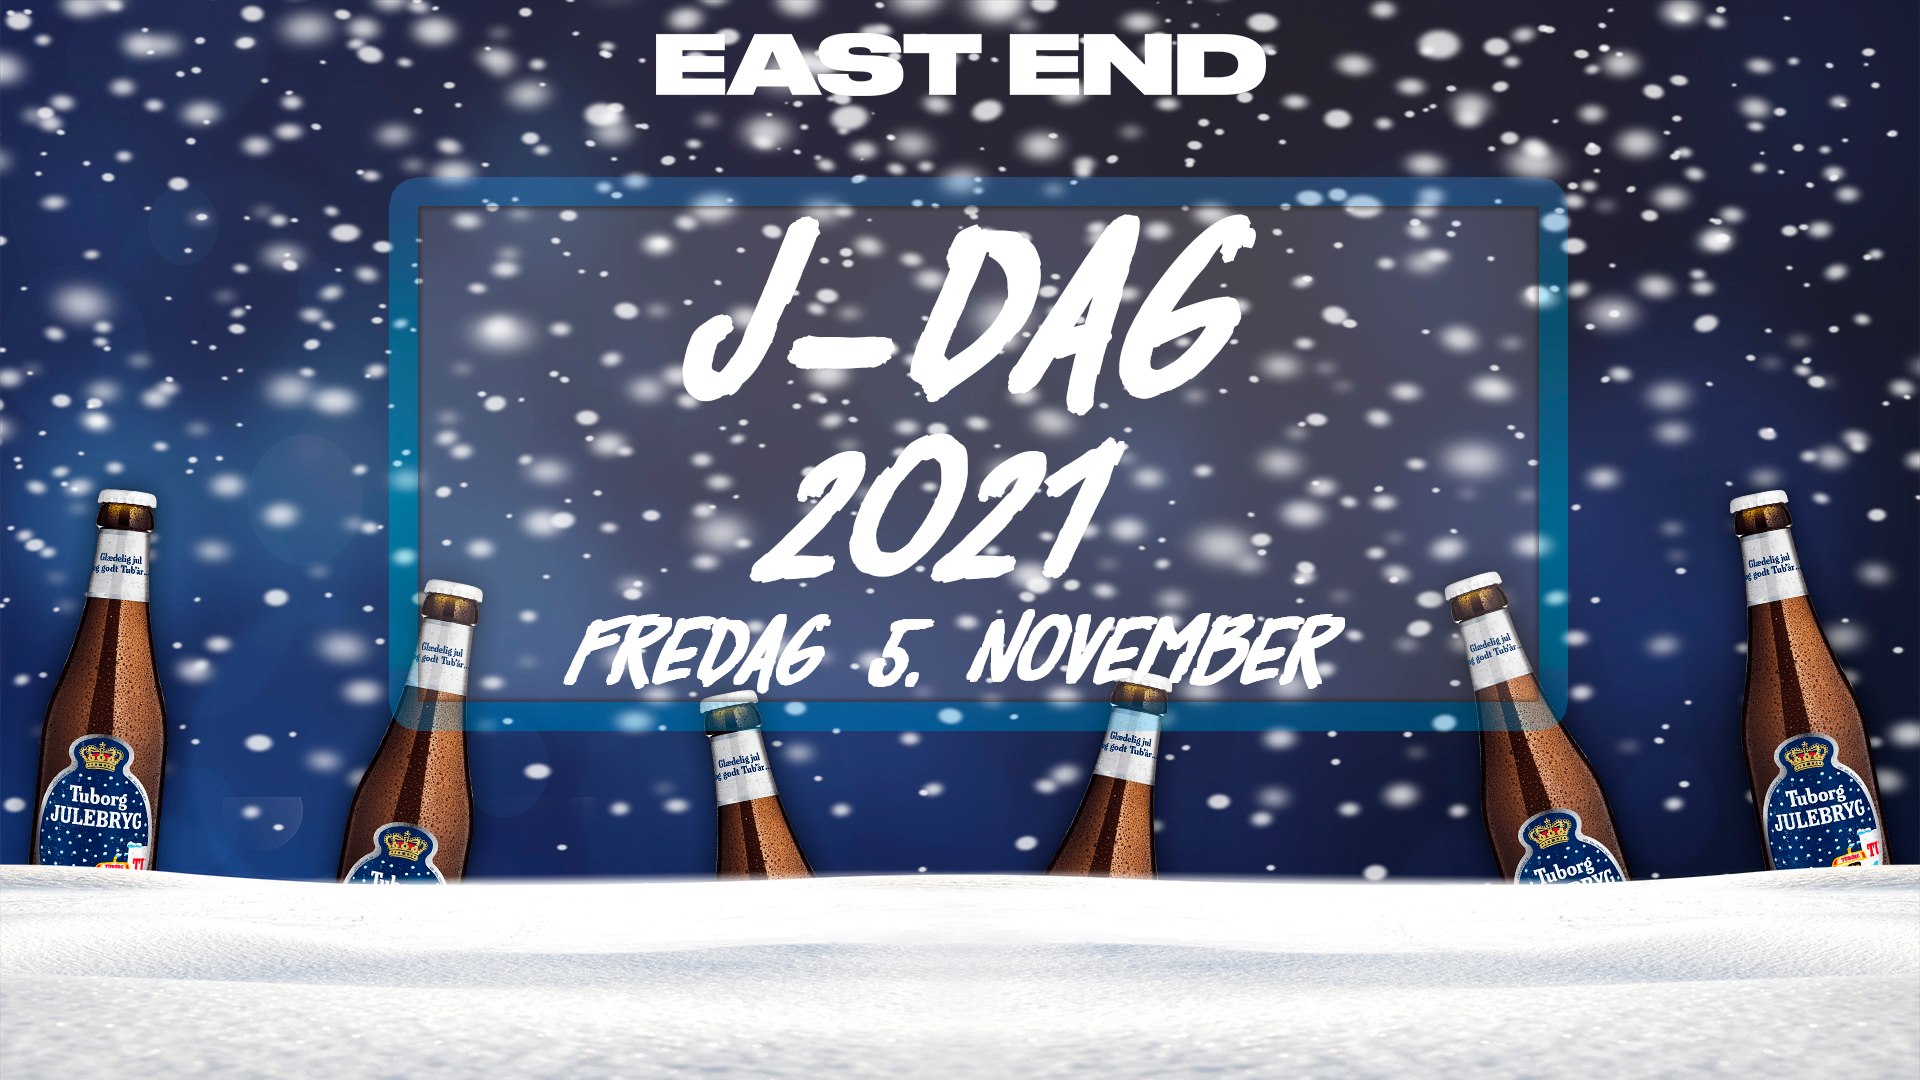 J-DAG // EAST END